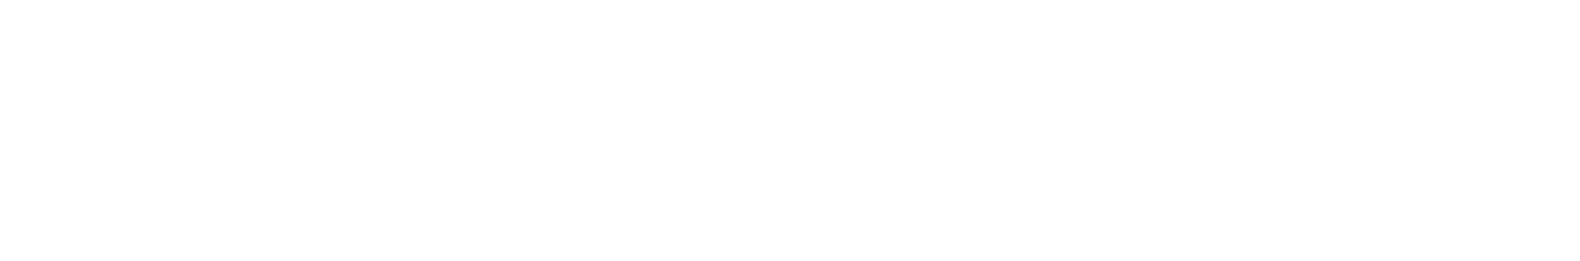 Corticeira Amorim logo large for dark backgrounds (transparent PNG)